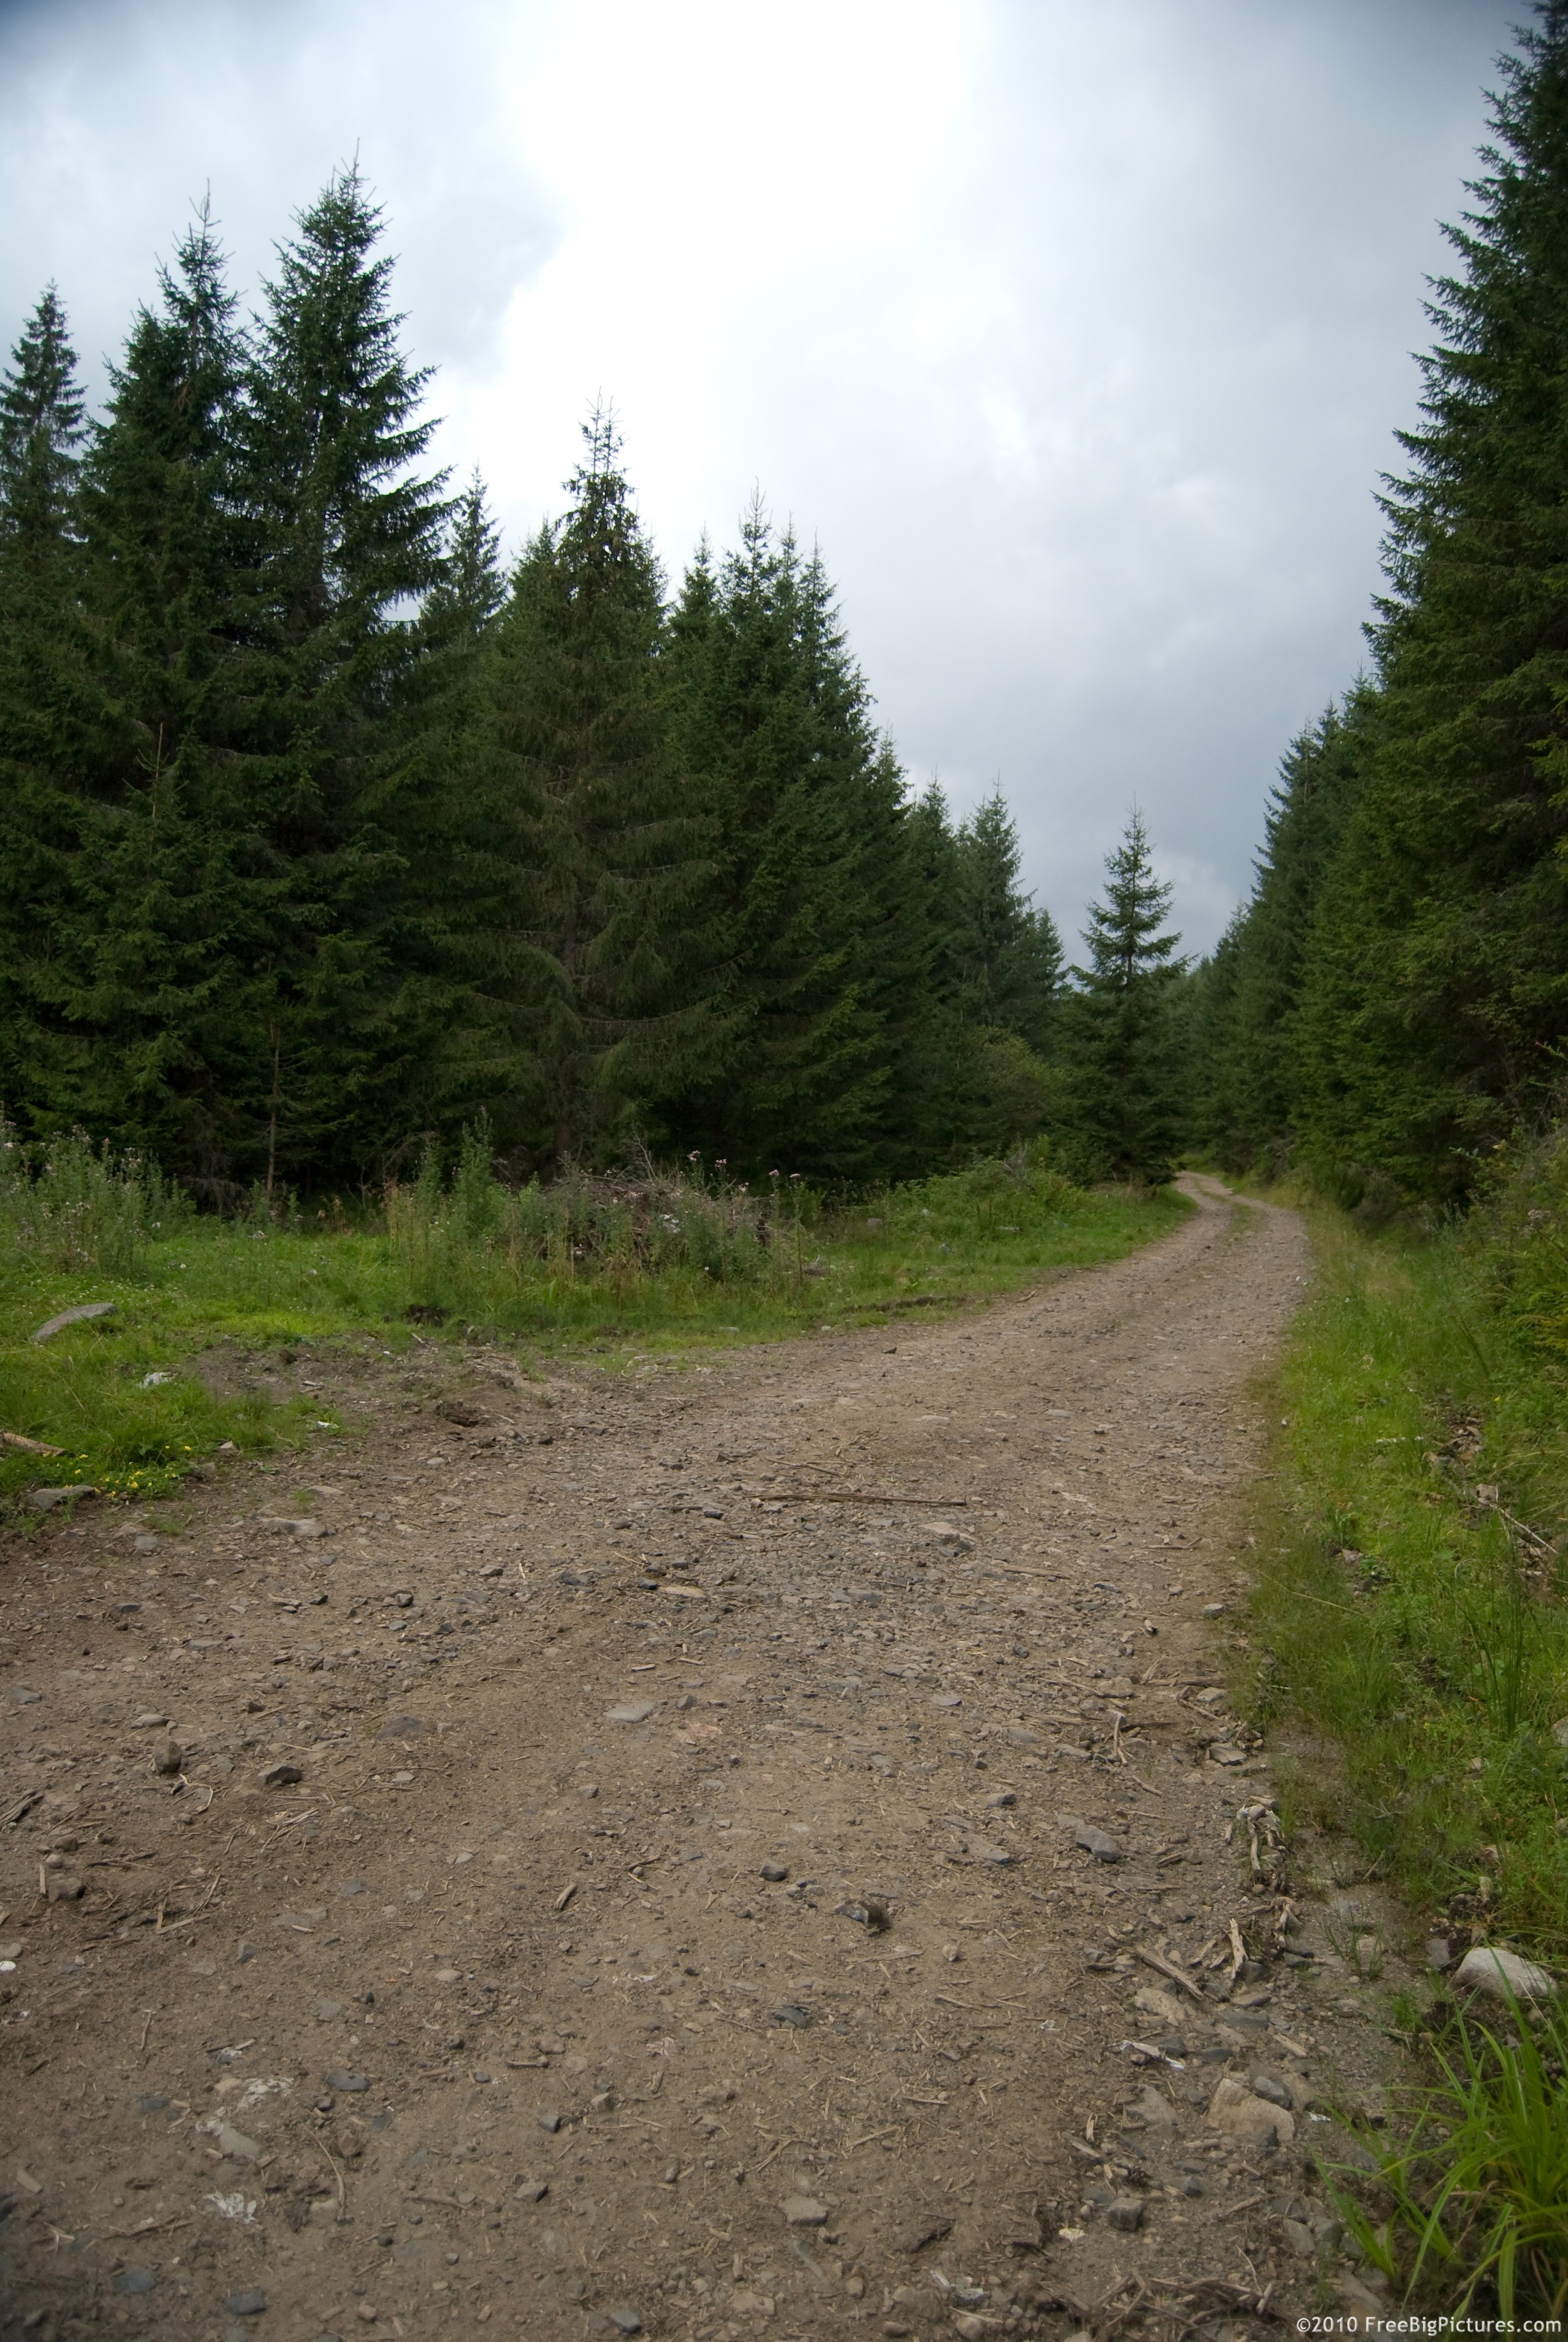 A road through a fir forest, circulated by trucks